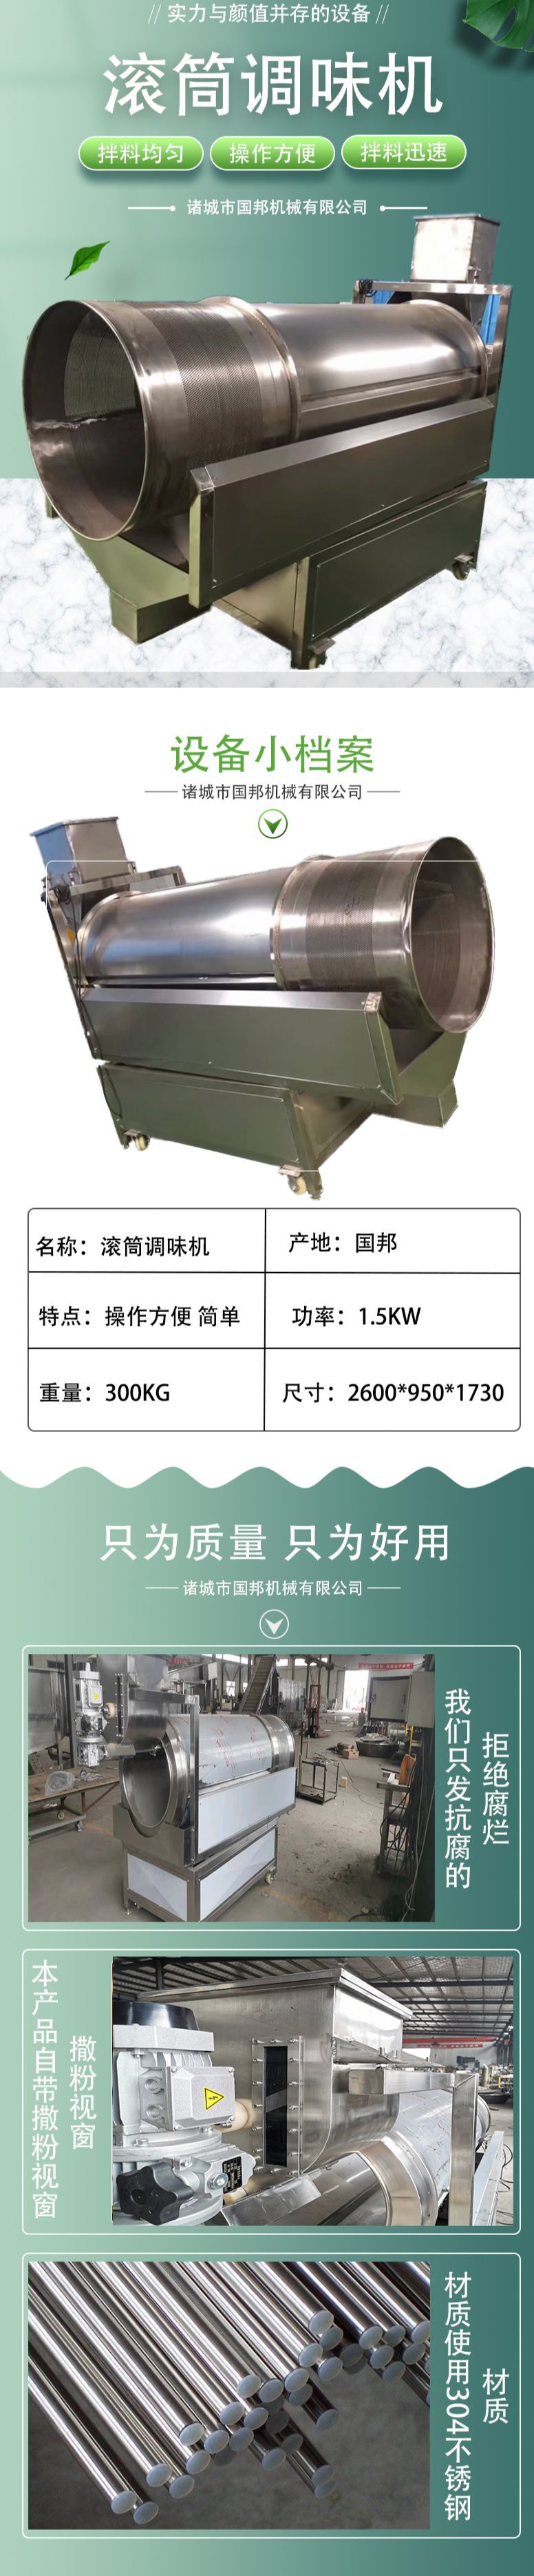 Potato chip seasoning machine, leisure food drum mixer, stainless steel material, Guobang Machinery